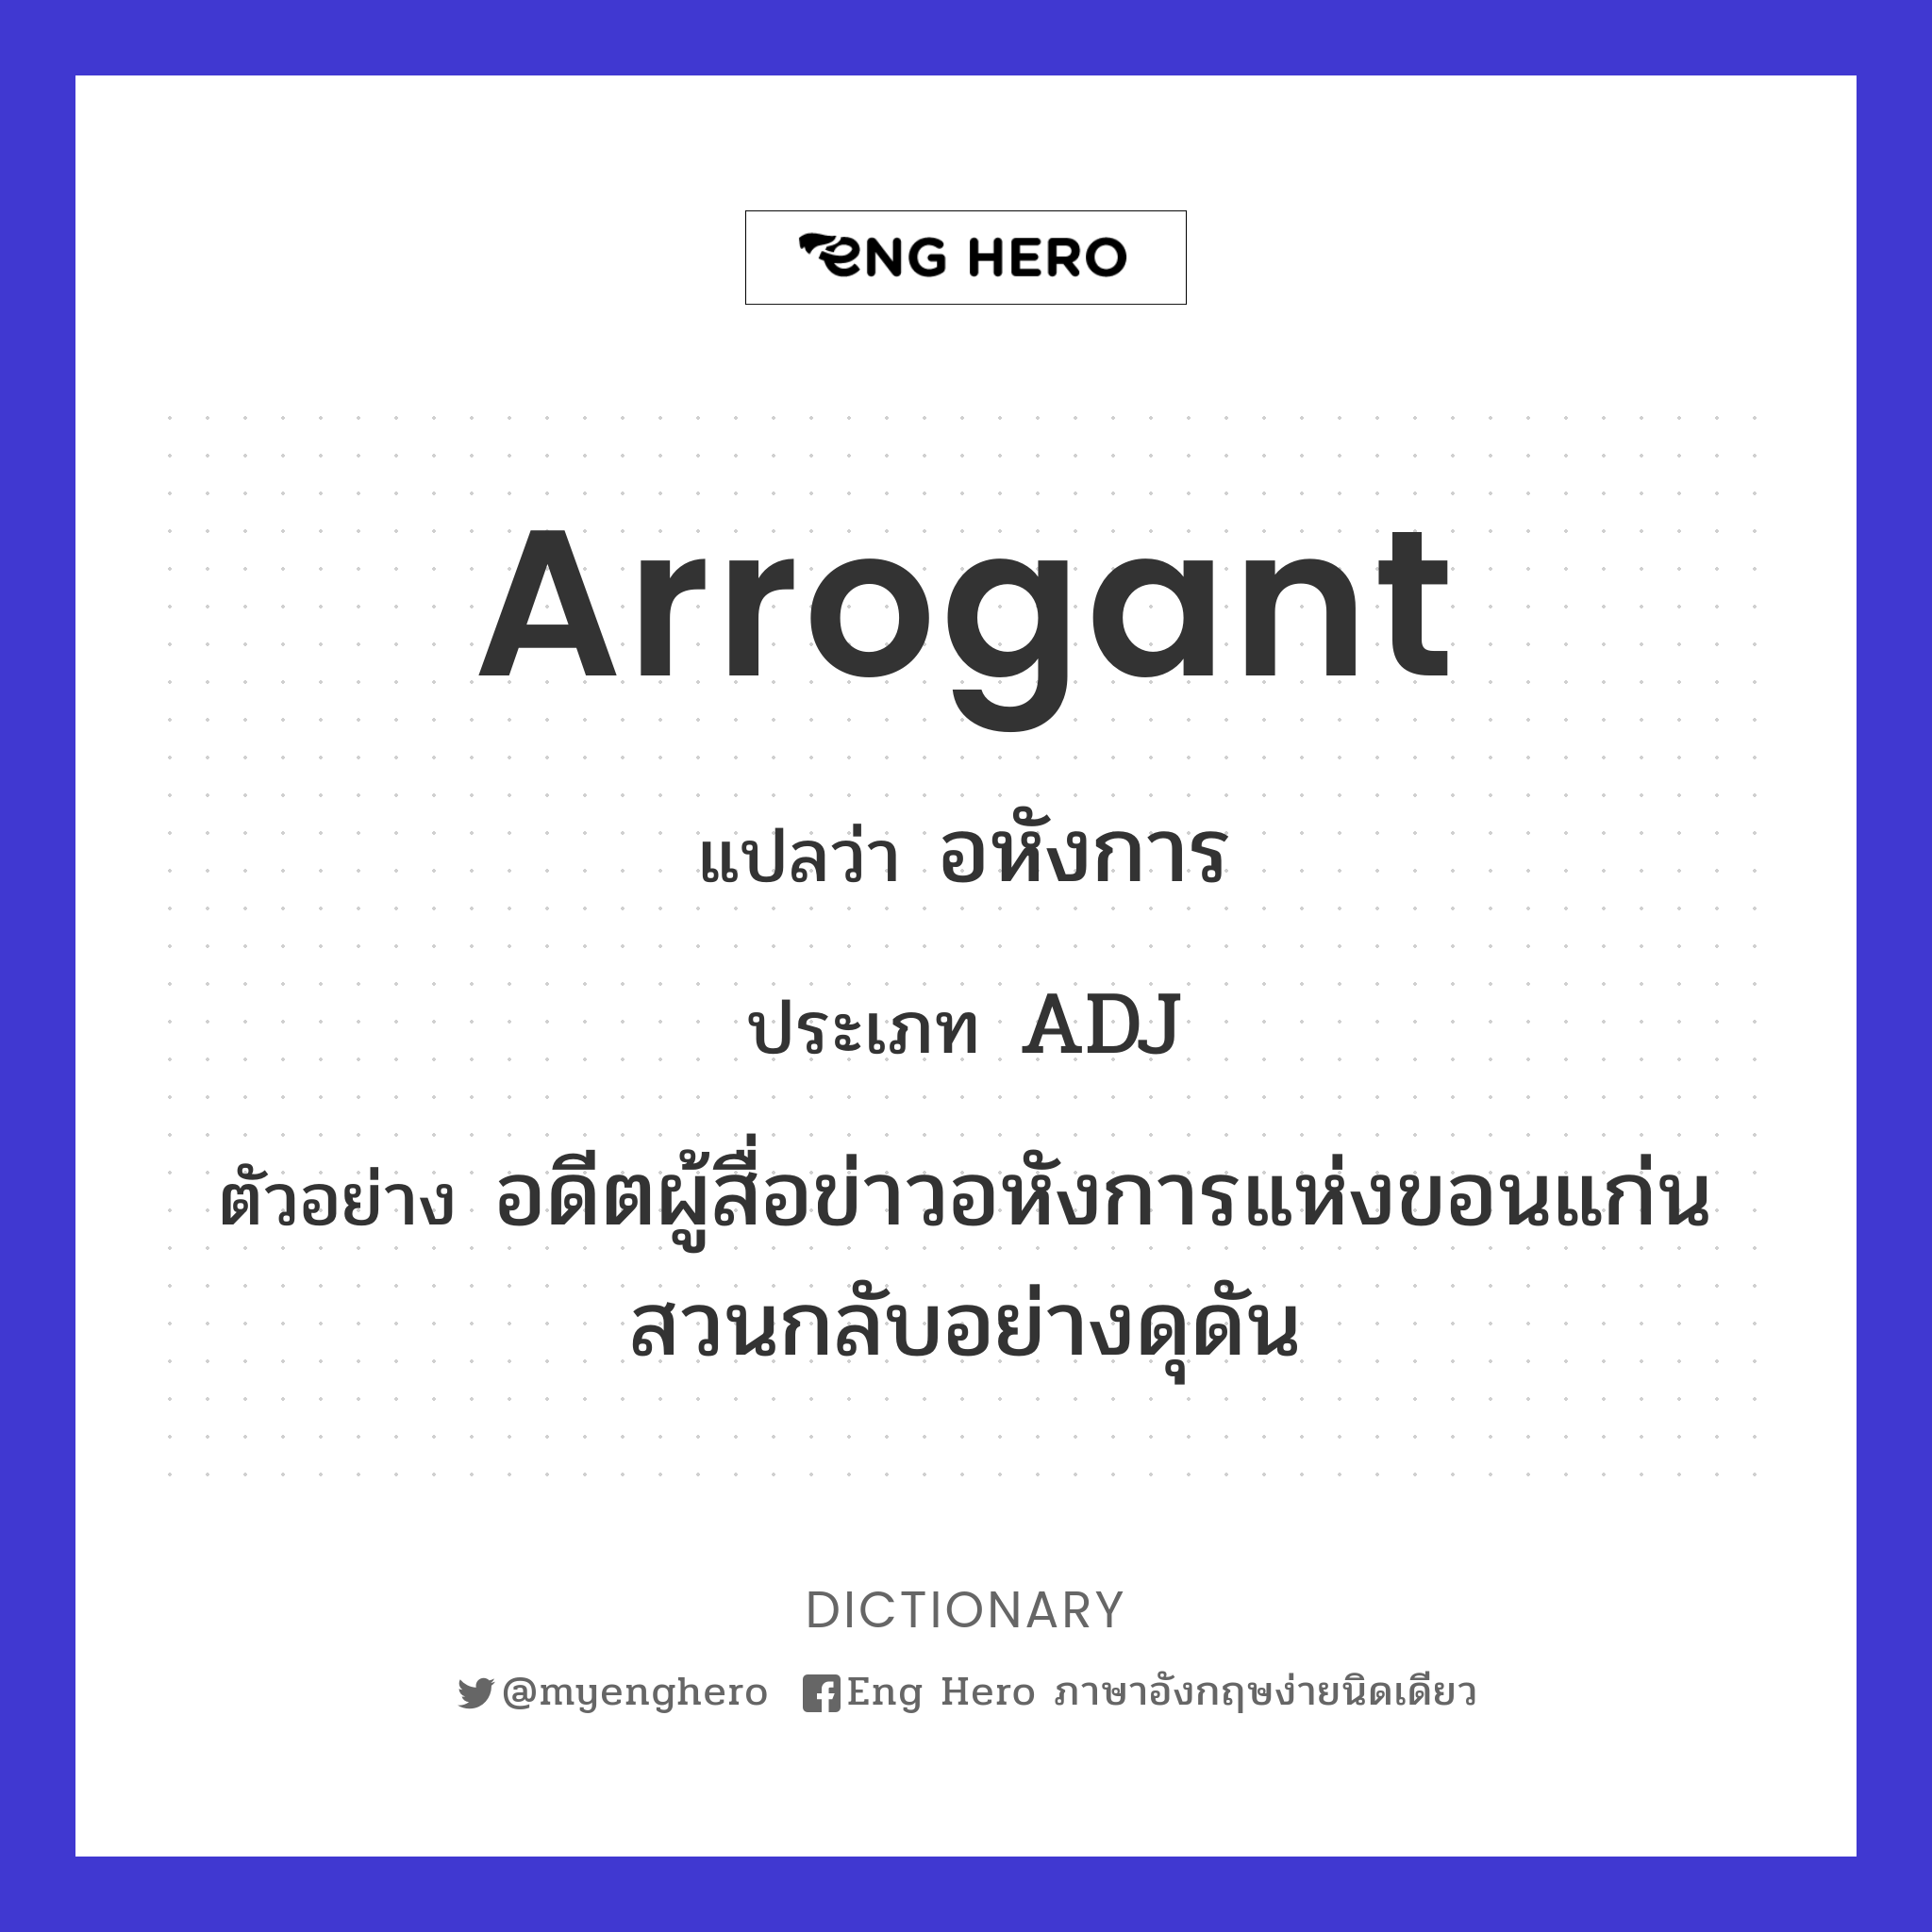 arrogant